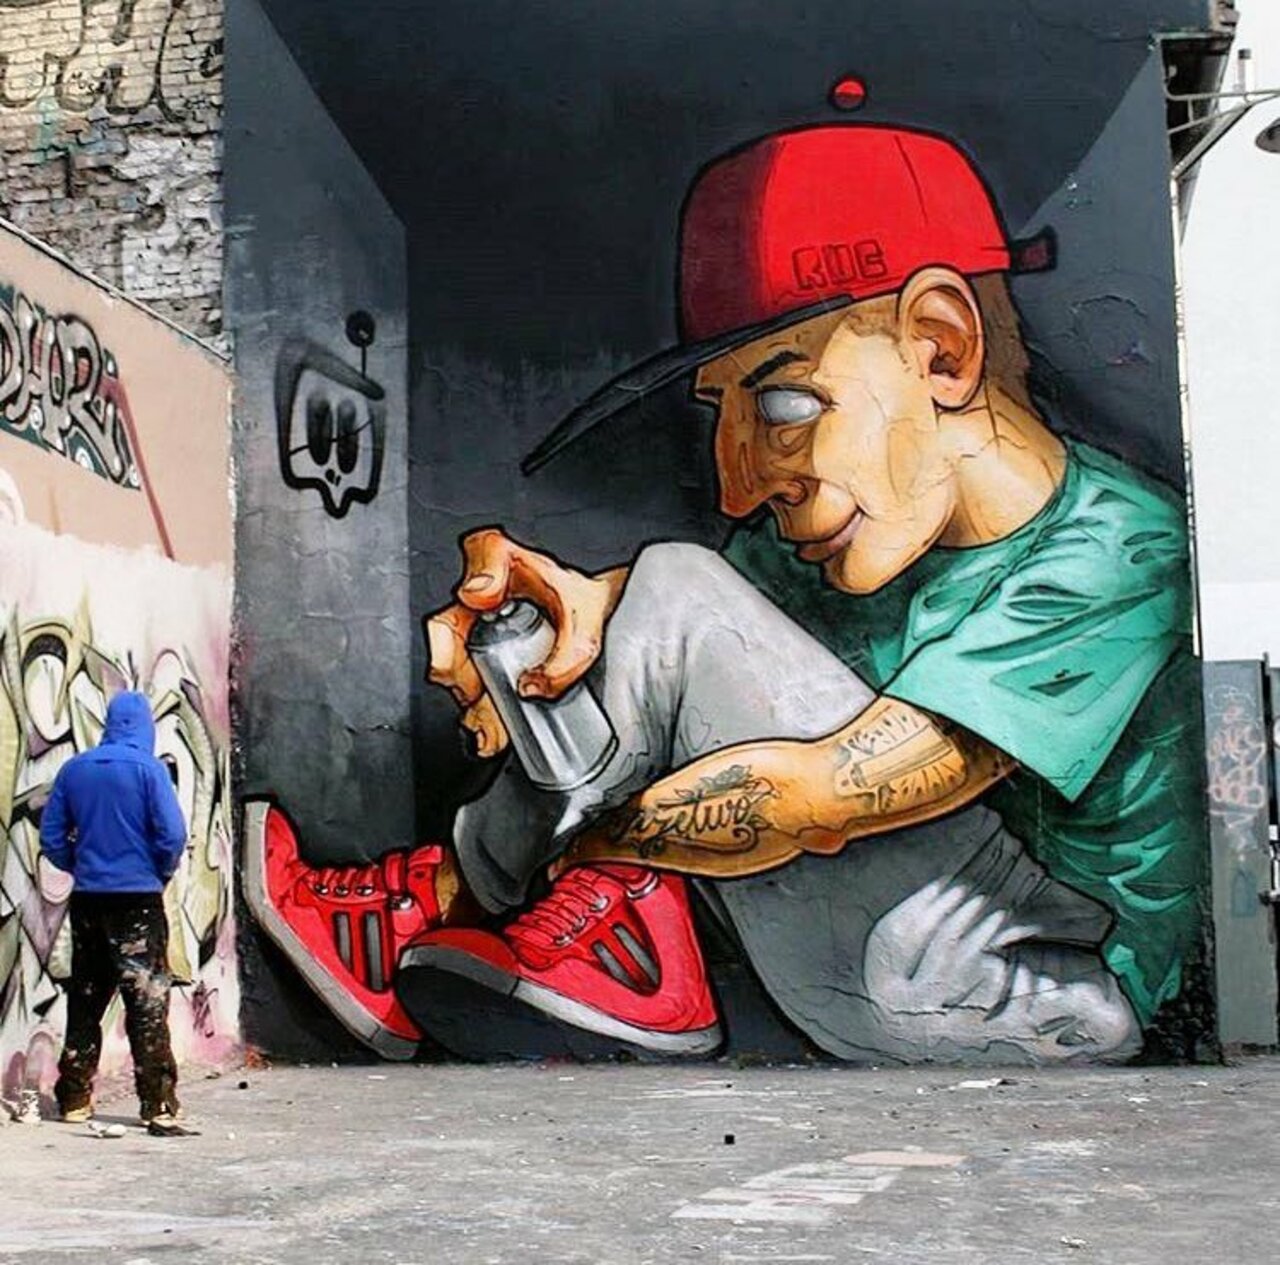 New Street Art • Size TwoBerlin #art #mural #graffiti #streetart https://t.co/aEmiov4VhG